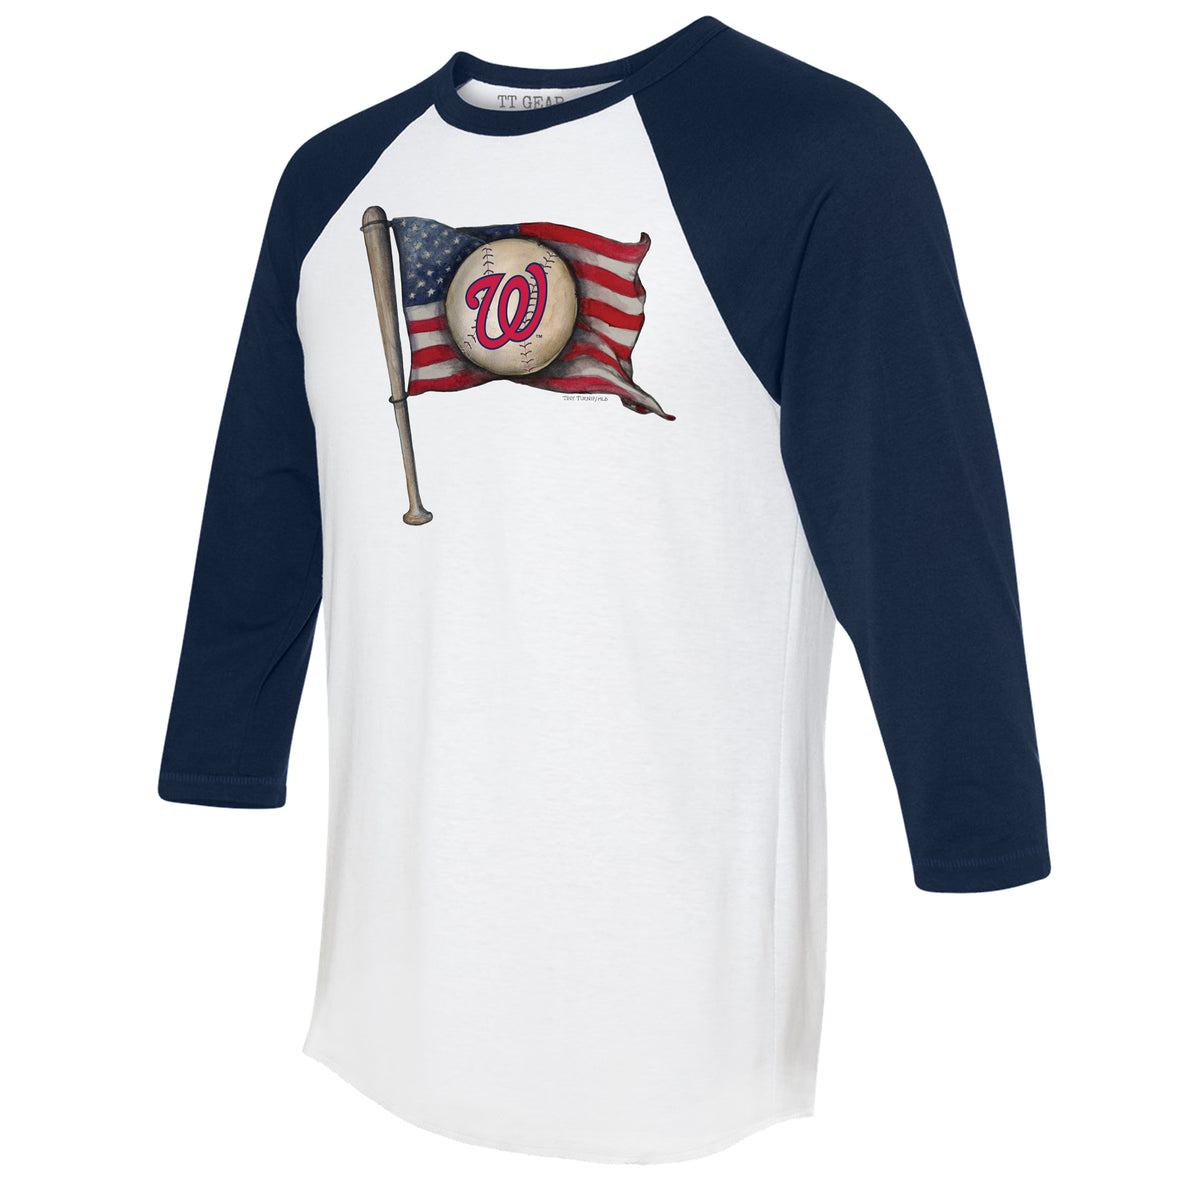 Washington Baseball Shirt 3/4 Sleeve Raglan